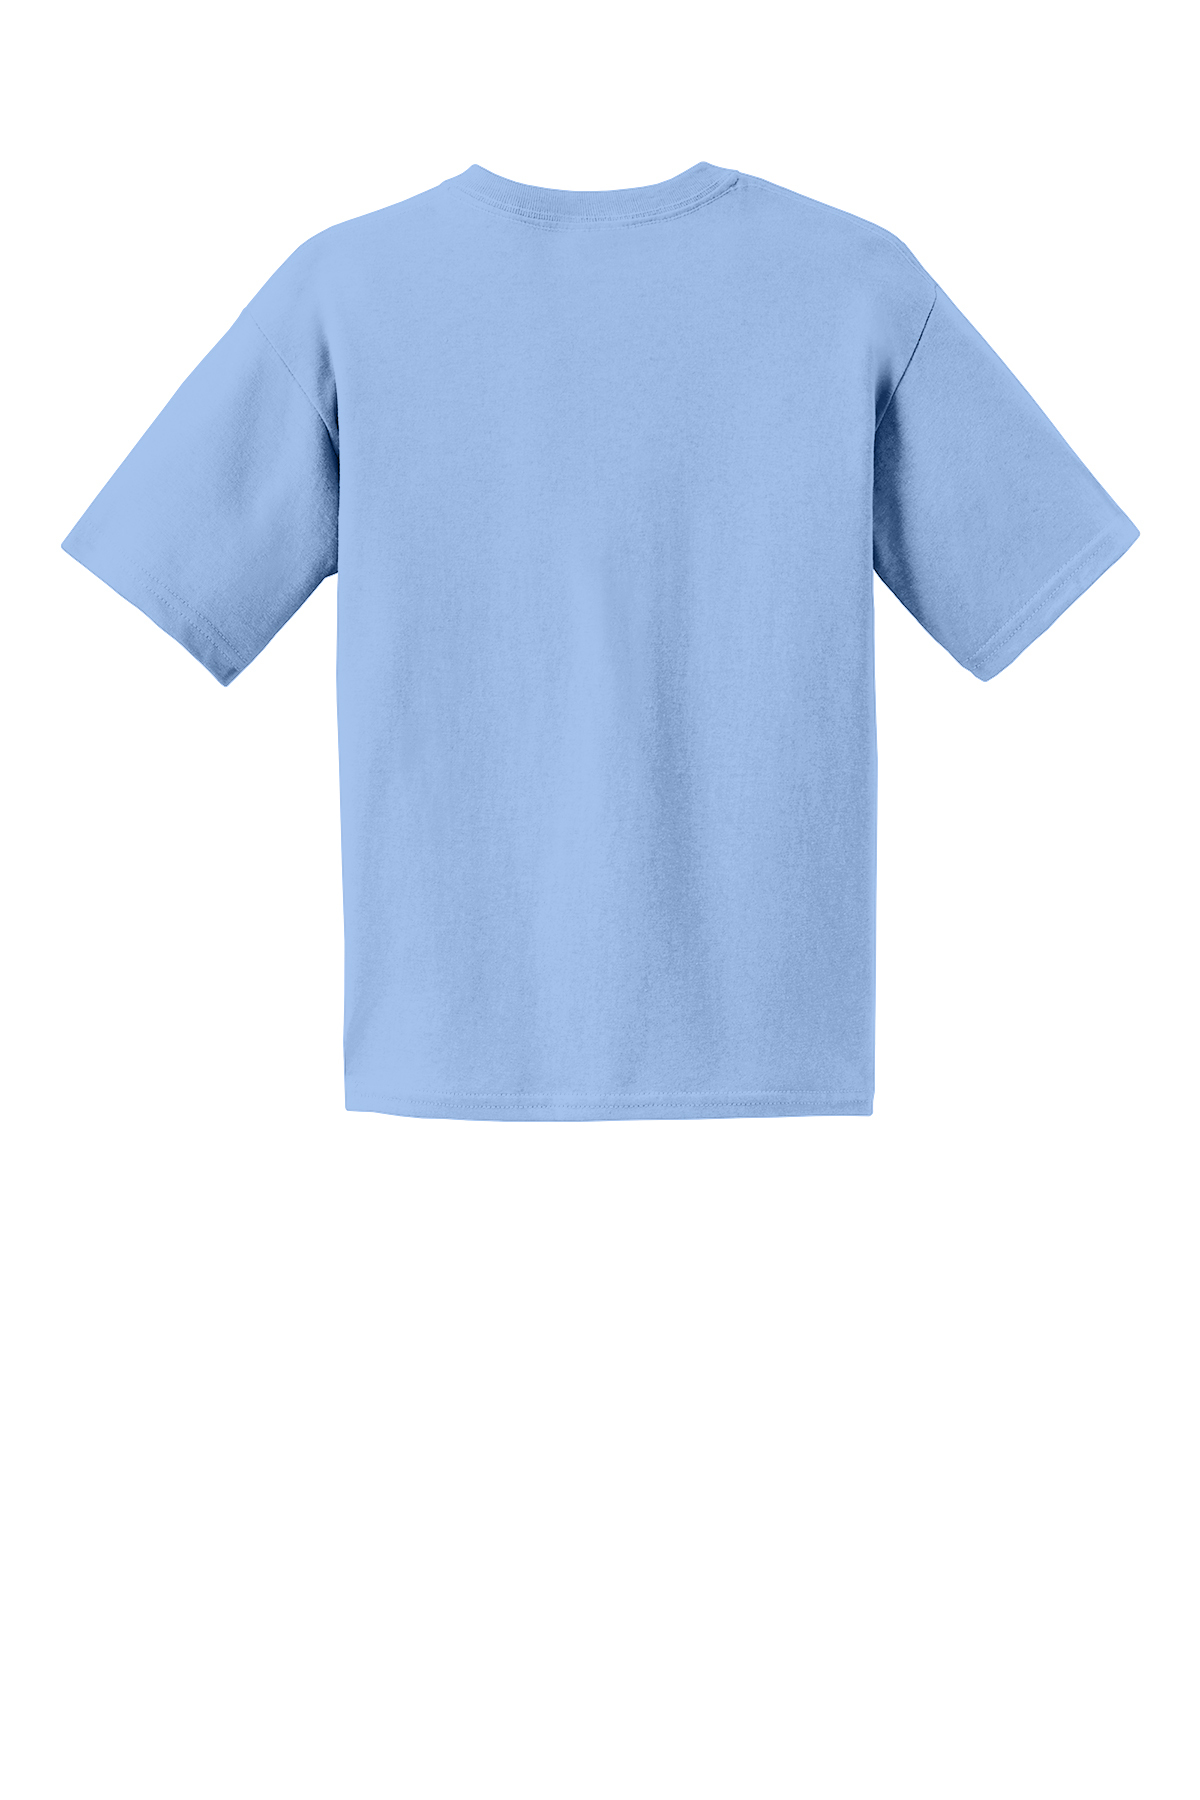 US 100% Cotton T-Shirt SanMar Youth Gildan Ultra | Product Cotton |